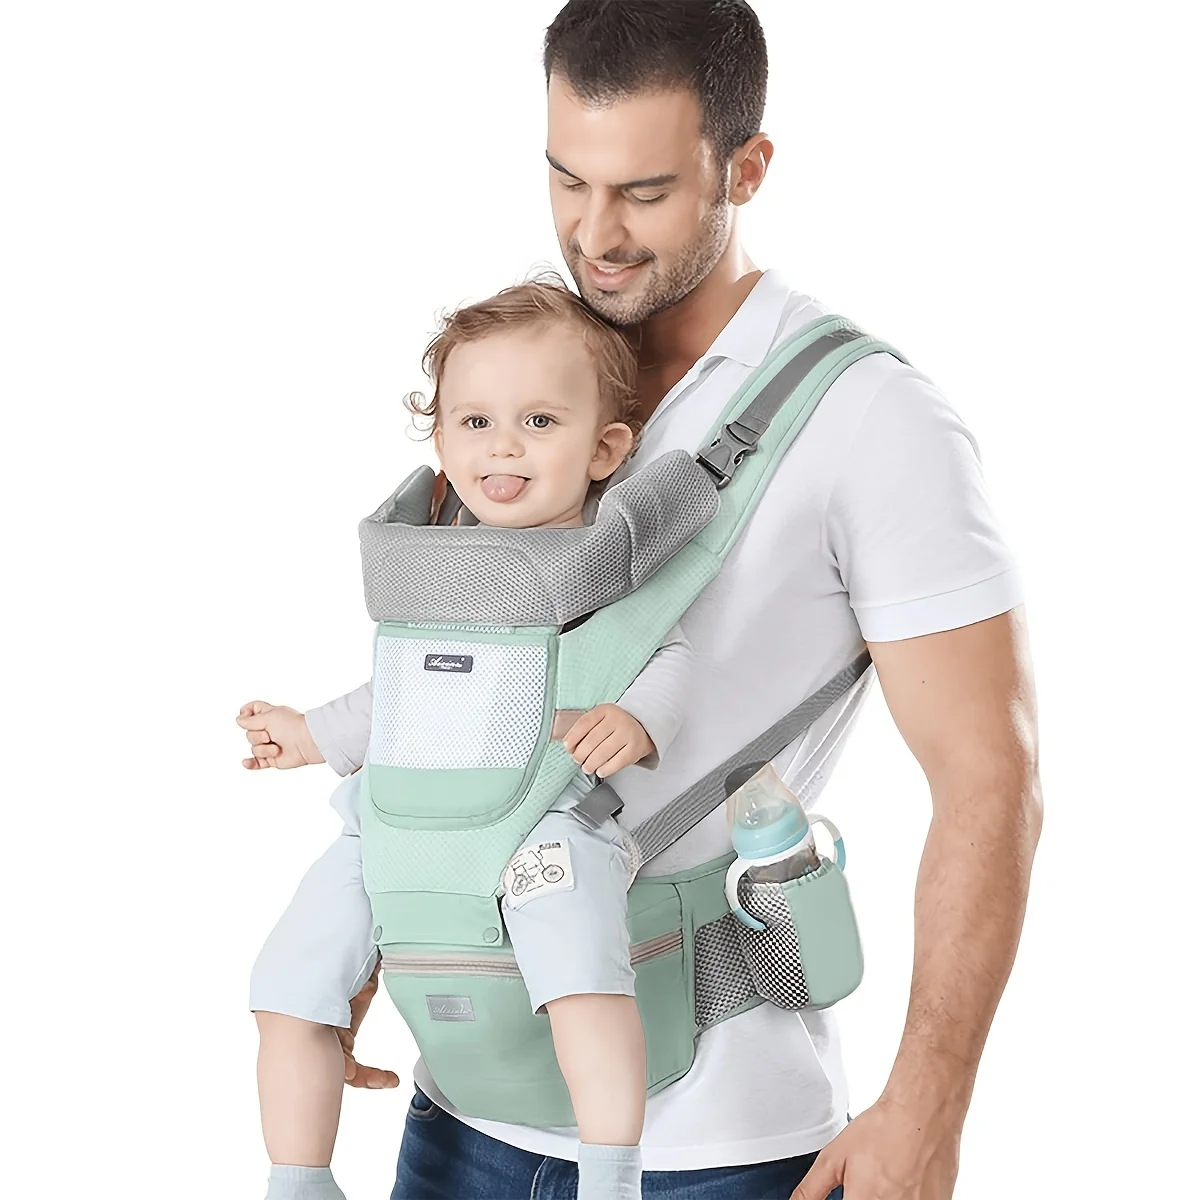 Детска переноска от висококачествен чист памук - удобно носене на вашето бебе 0-36 месеца!1